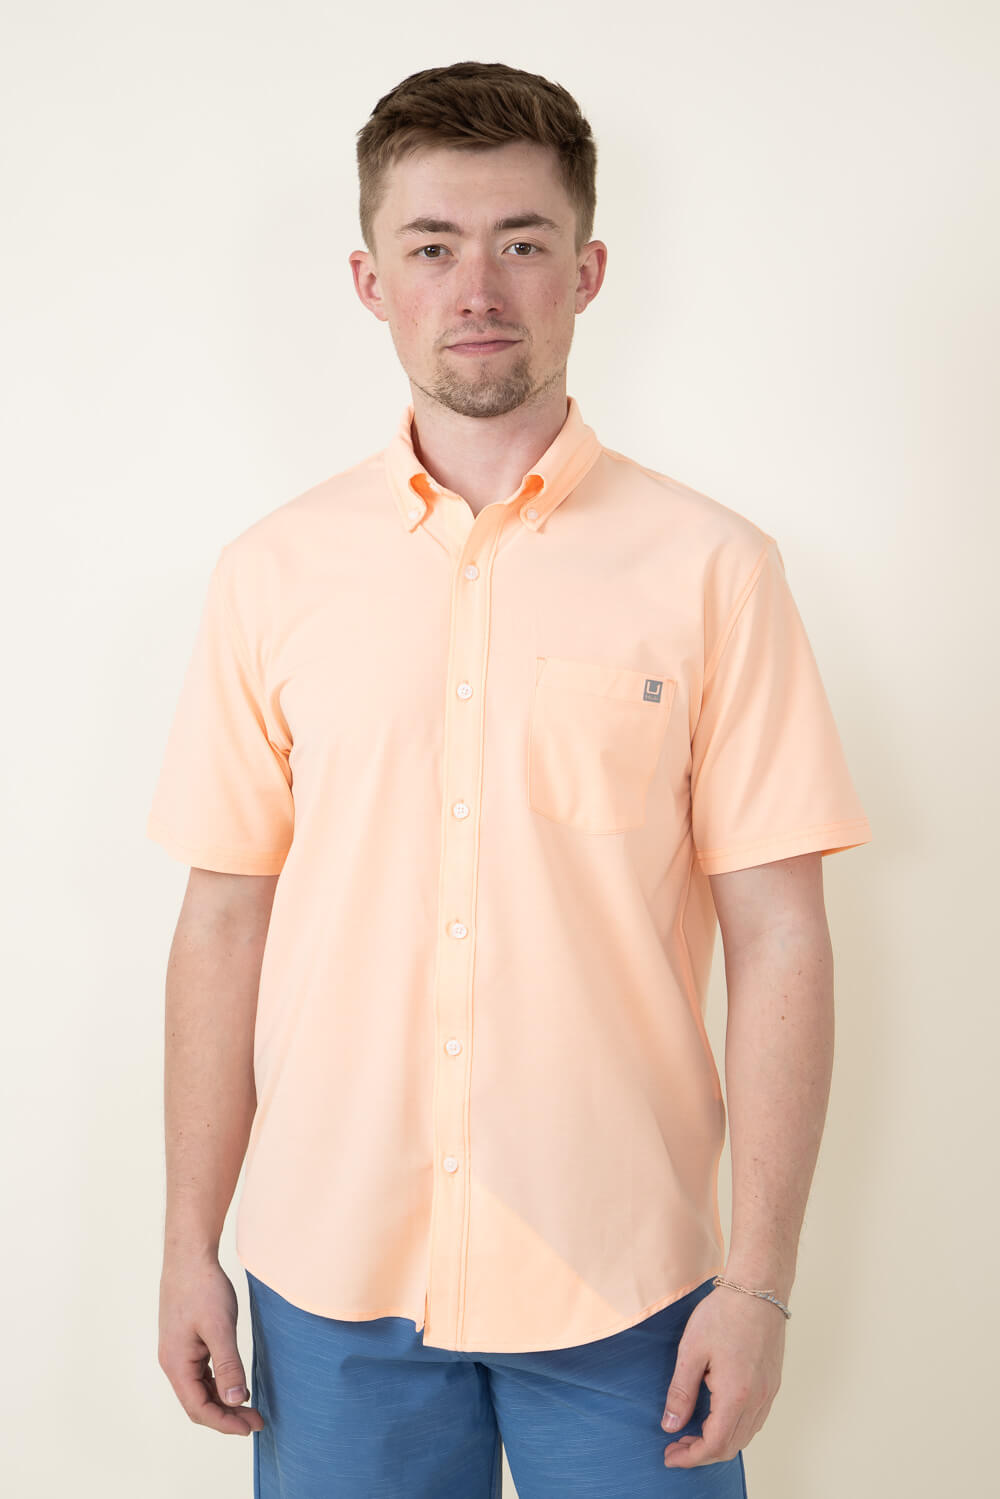 Men's Huk Kona Solid Button Up Shirt 2XLarge Peach Nectar